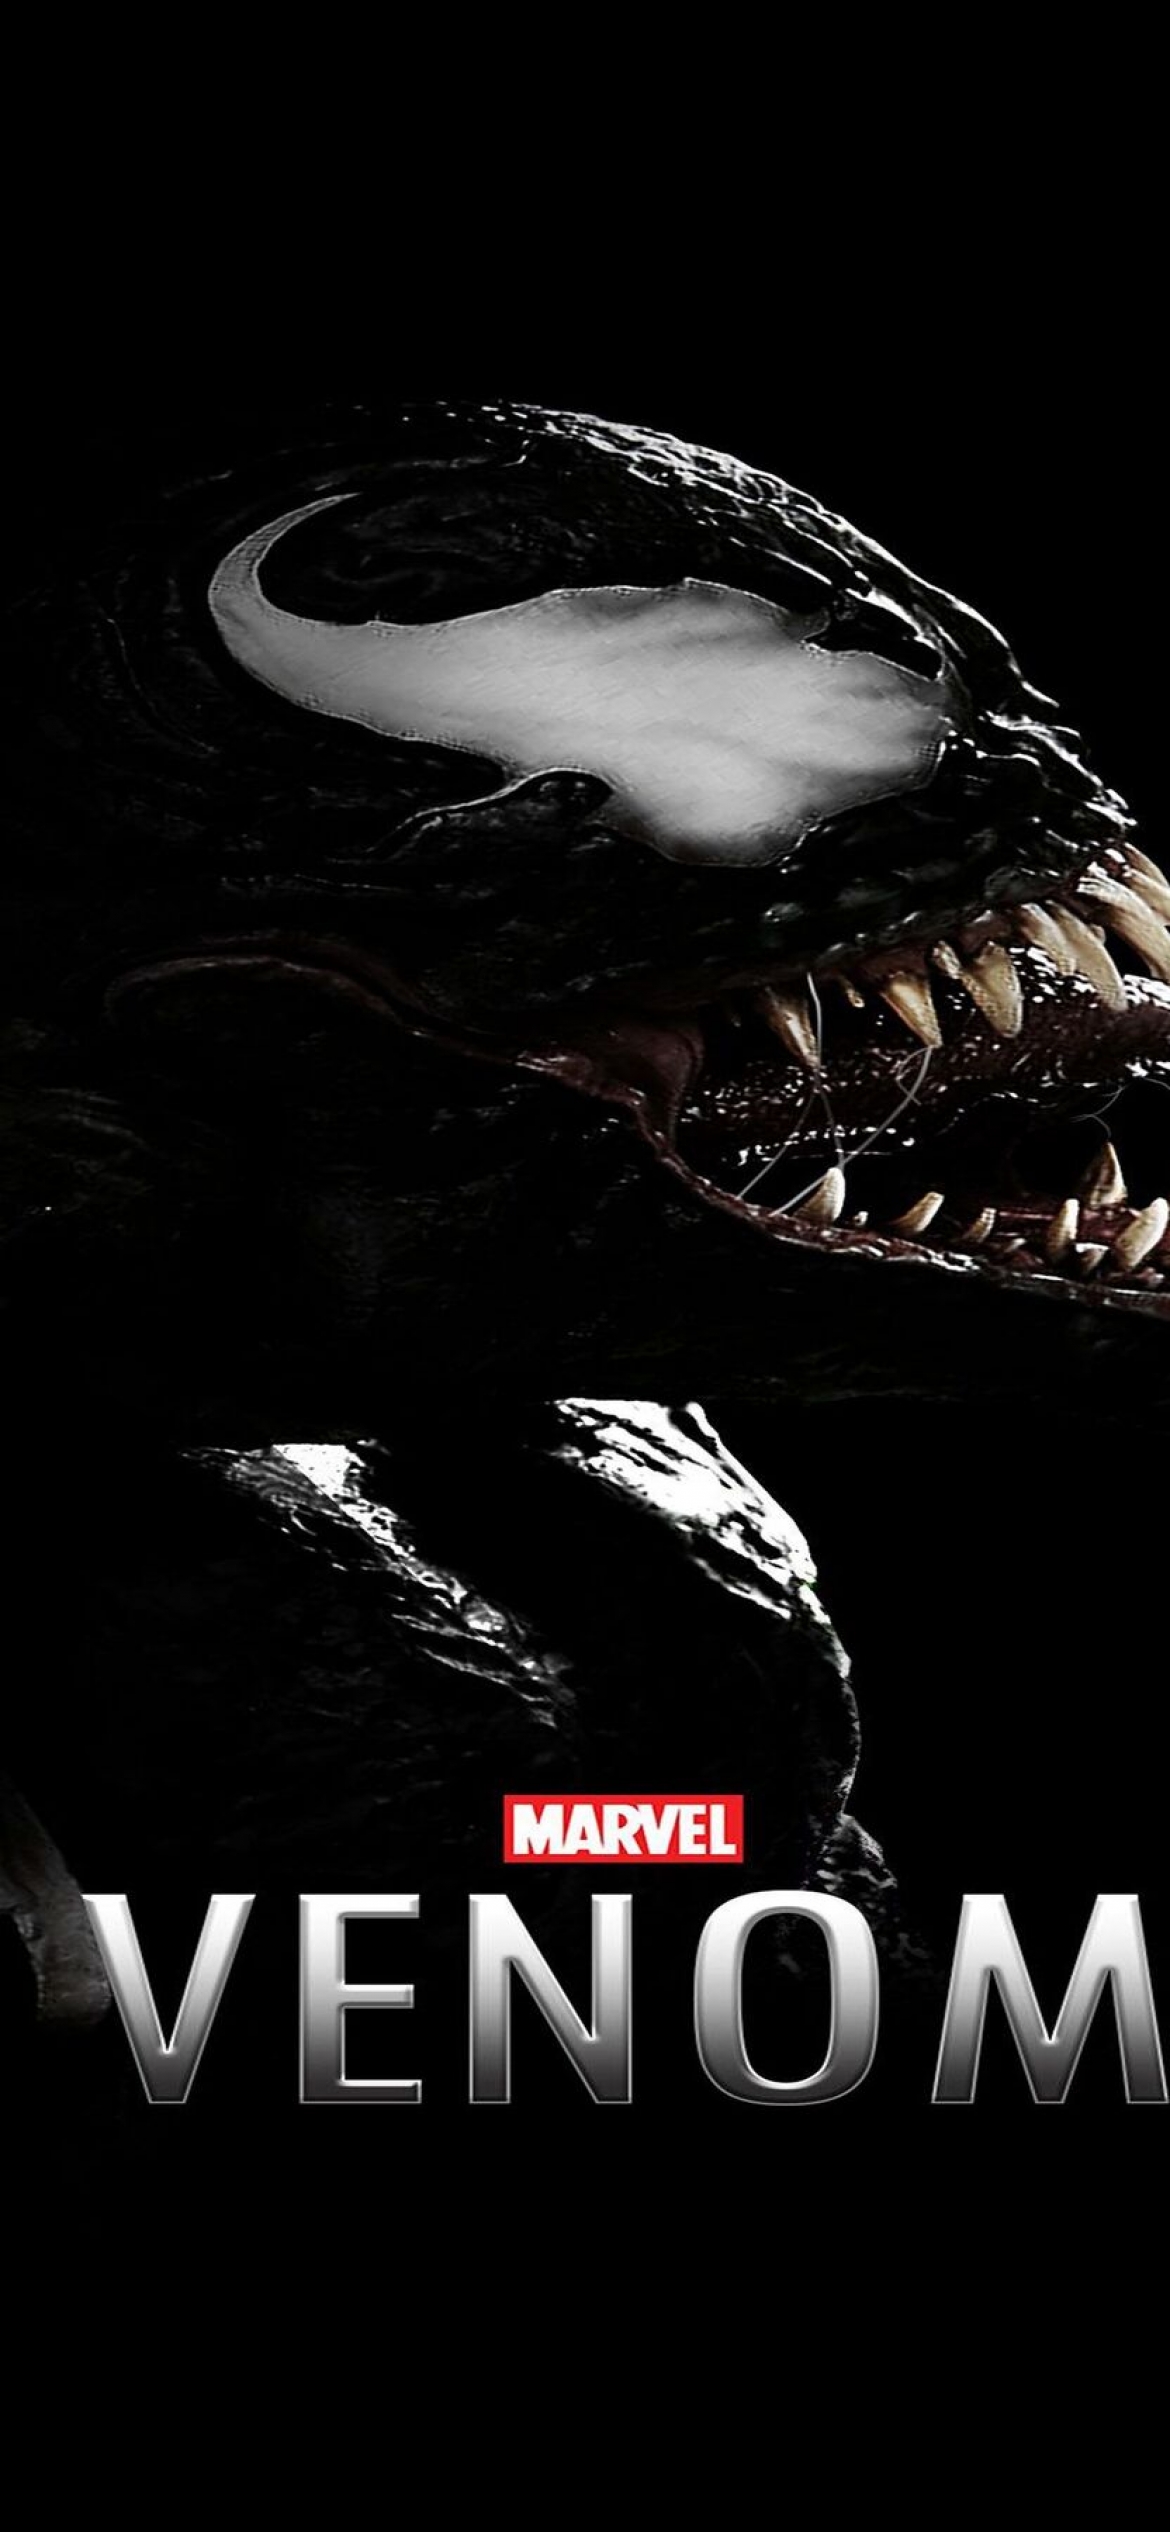 Download New Marvel Heroes Logos Venom Logo in 5K Wallpapers Wallpaper ...